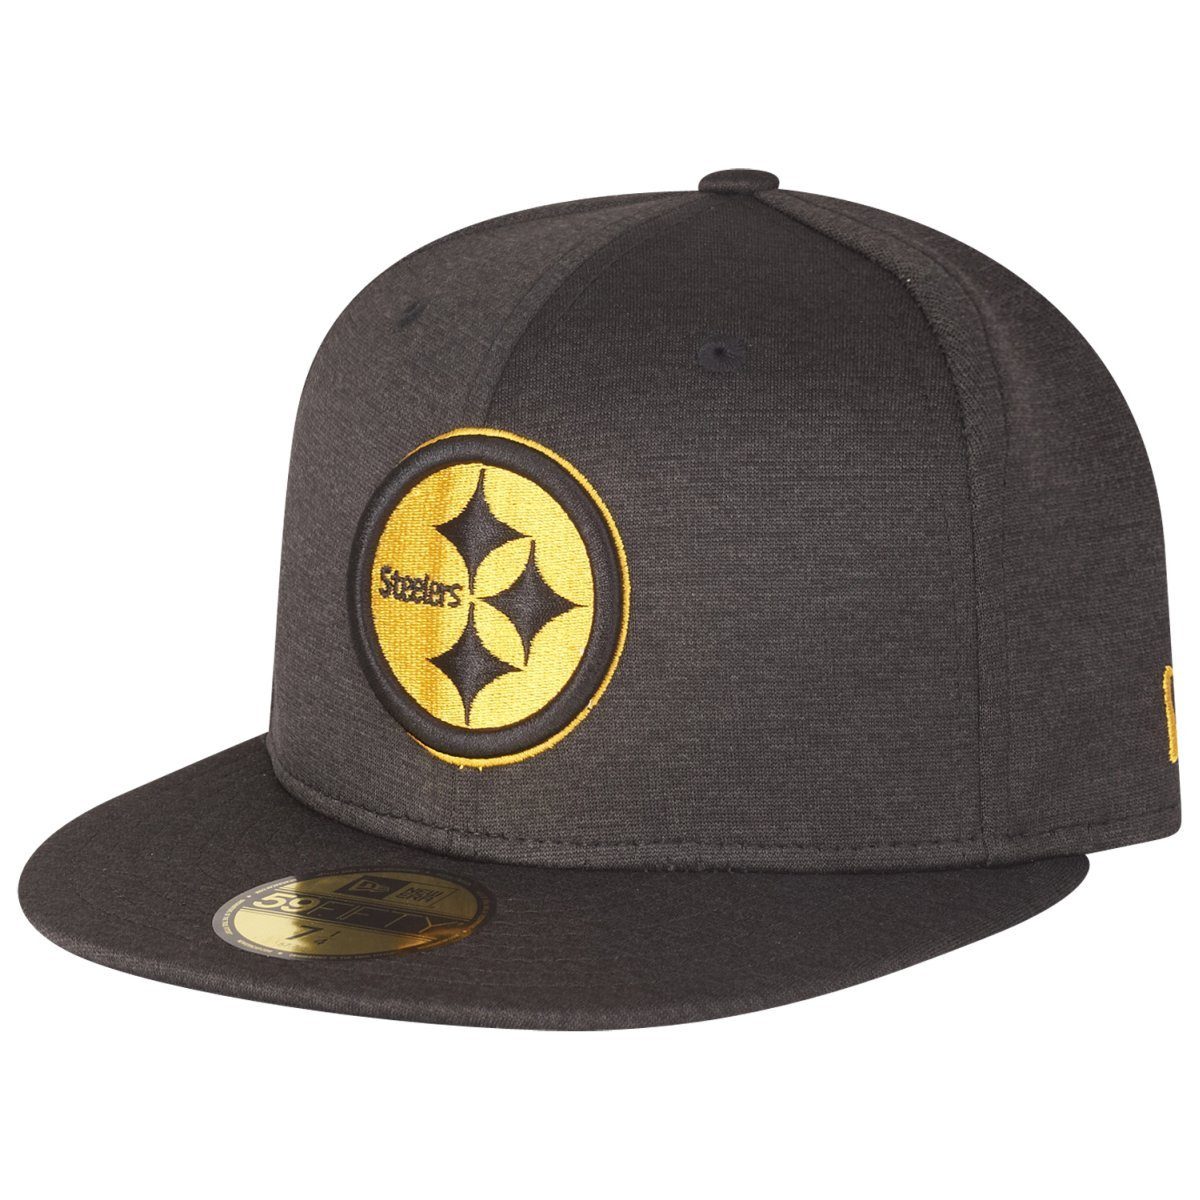 Herren Caps New Era Fitted Cap 59Fifty SHADOW TECH NFL Pittsburgh Steelers